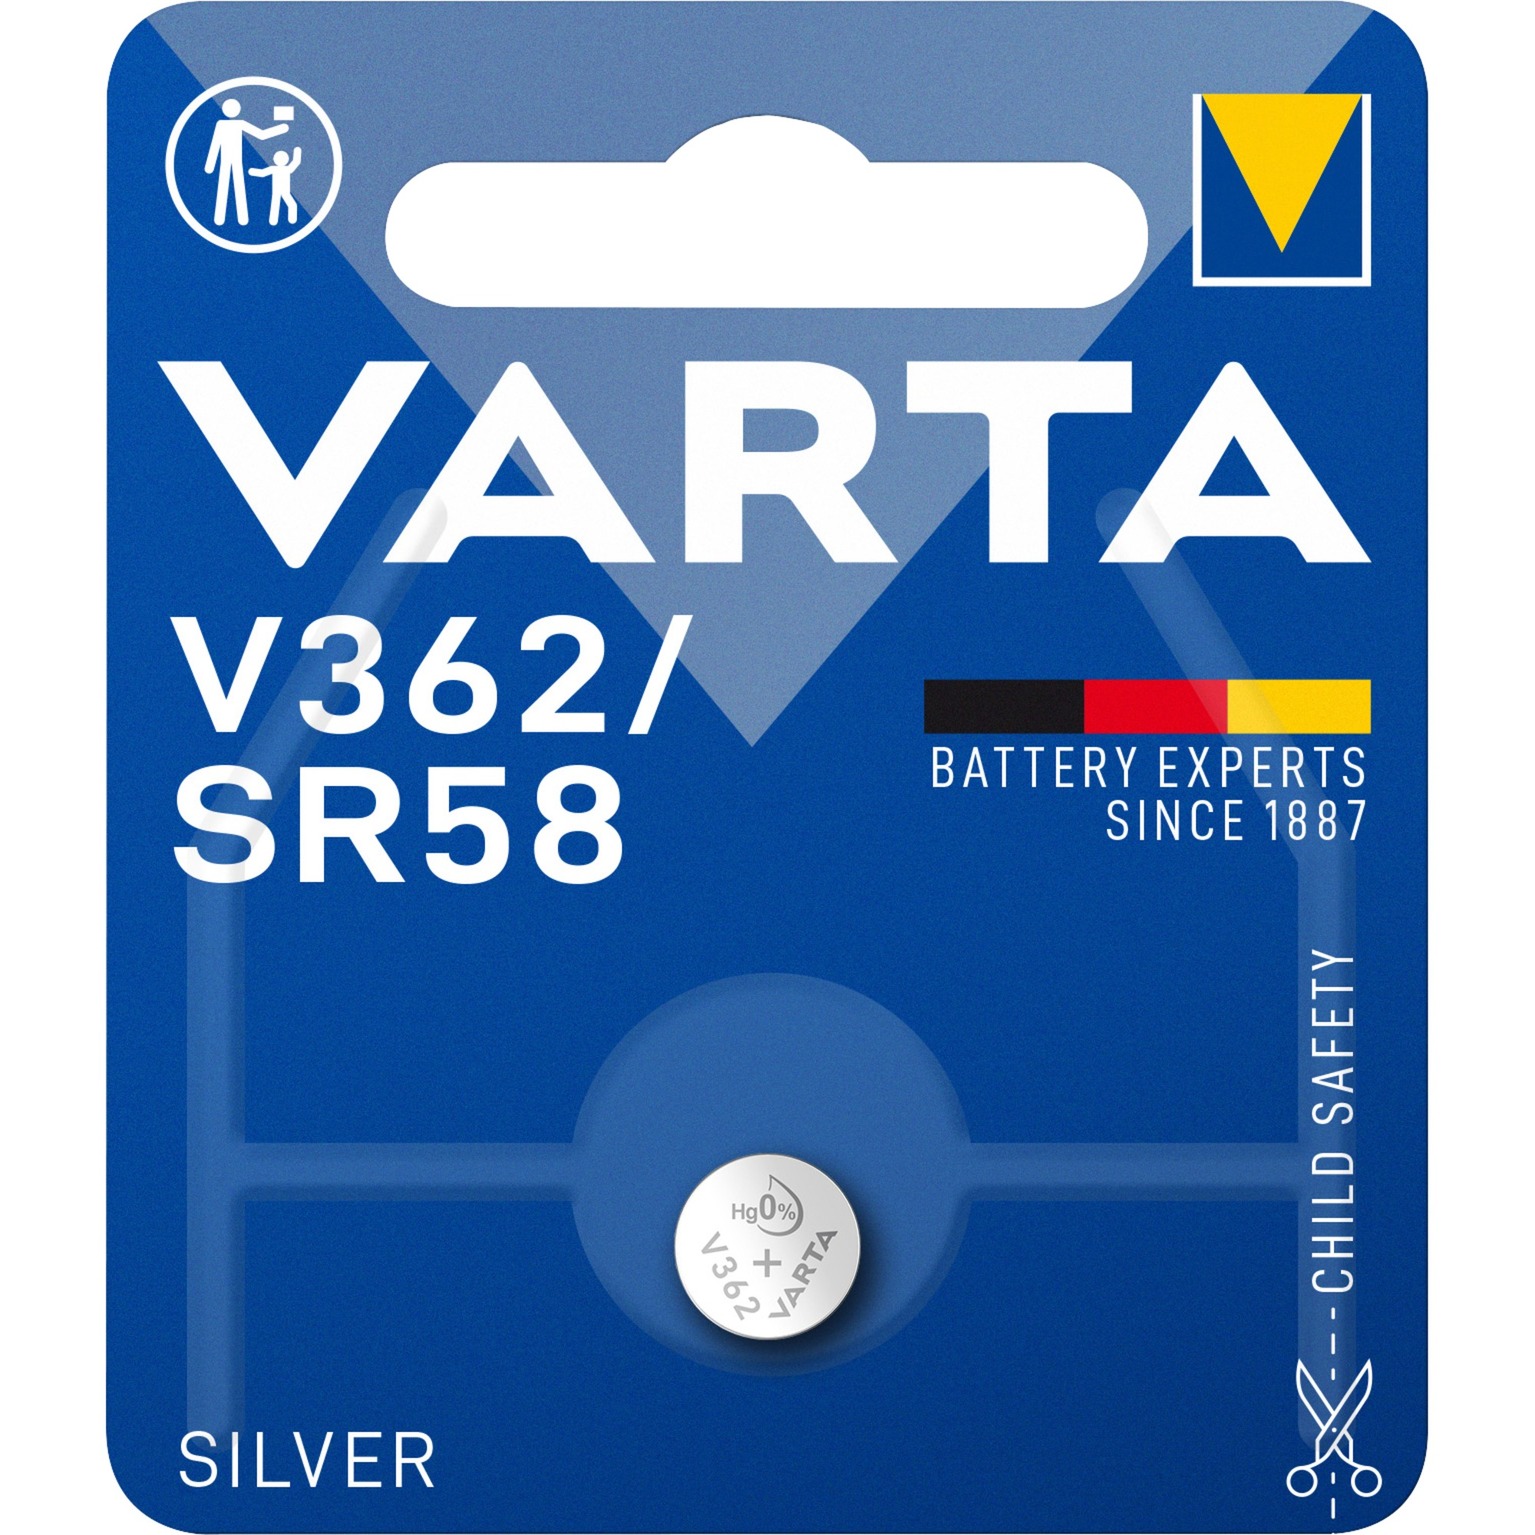 SILVER Coin V362/SR58, Batterie von Varta